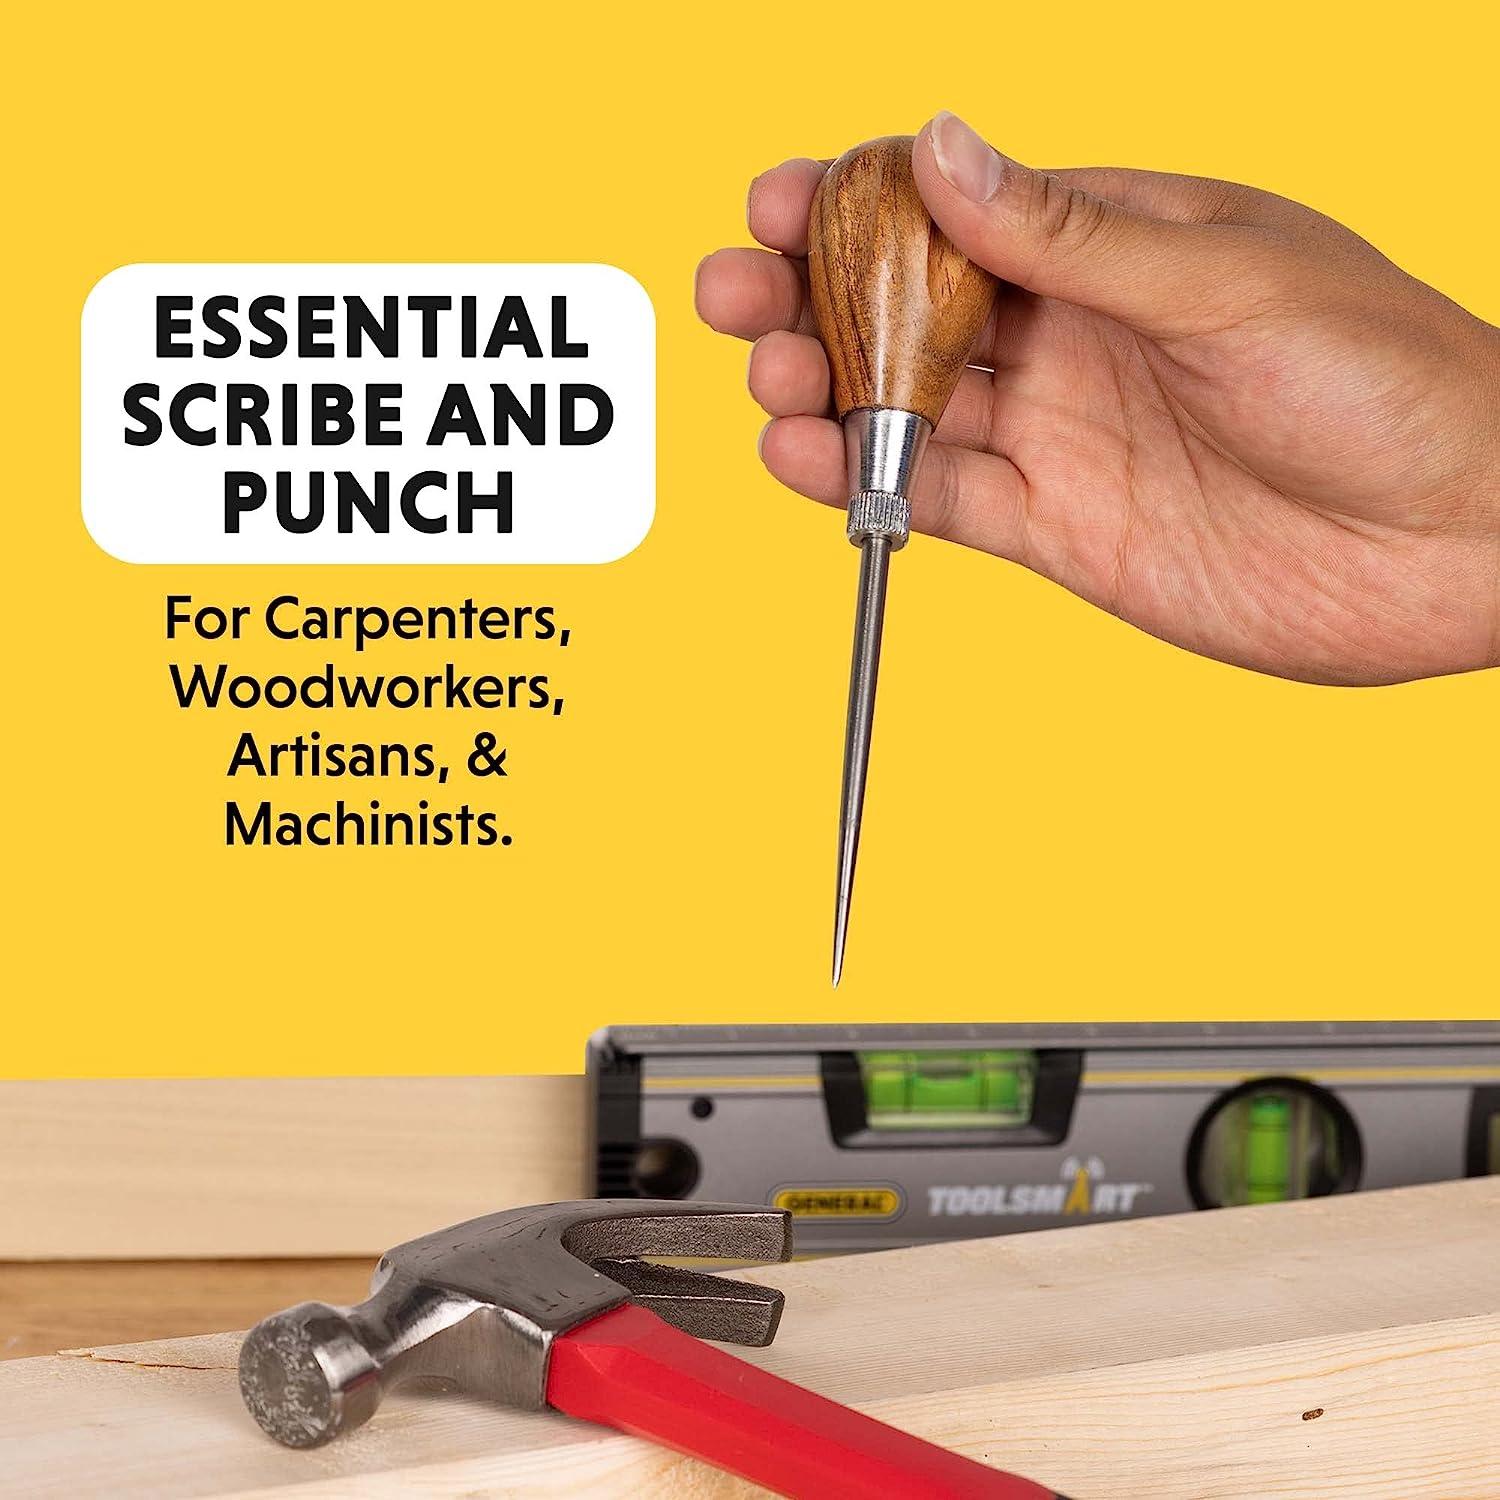 Scratch Art Scratch Tool Set - 1 Penholder and 7 Knife Points